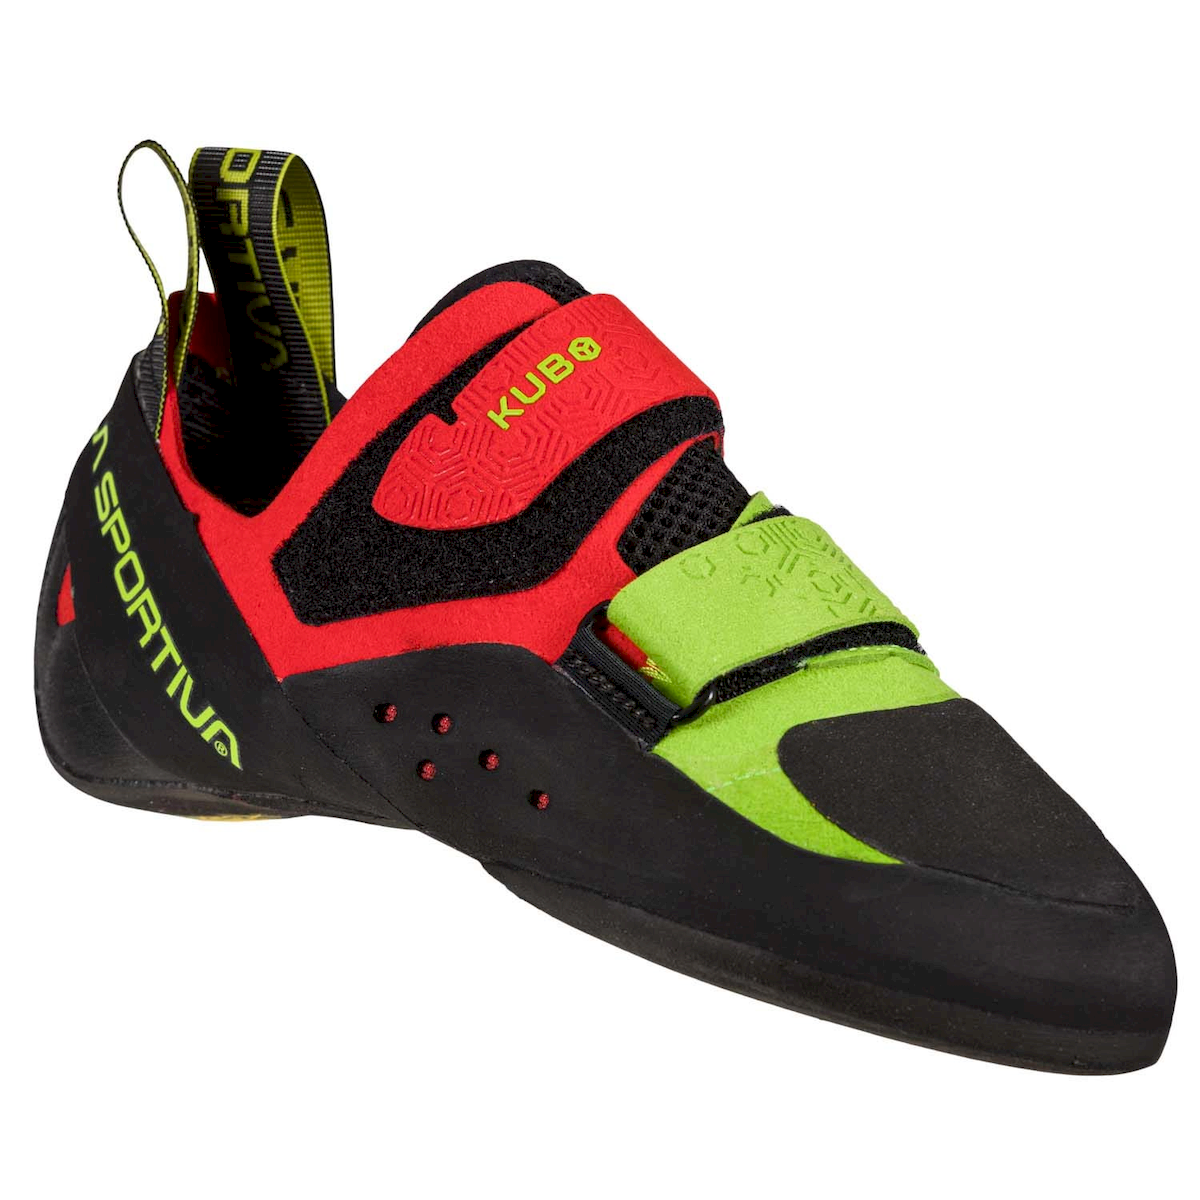 La Sportiva Kubo - Climbing shoes - Men's